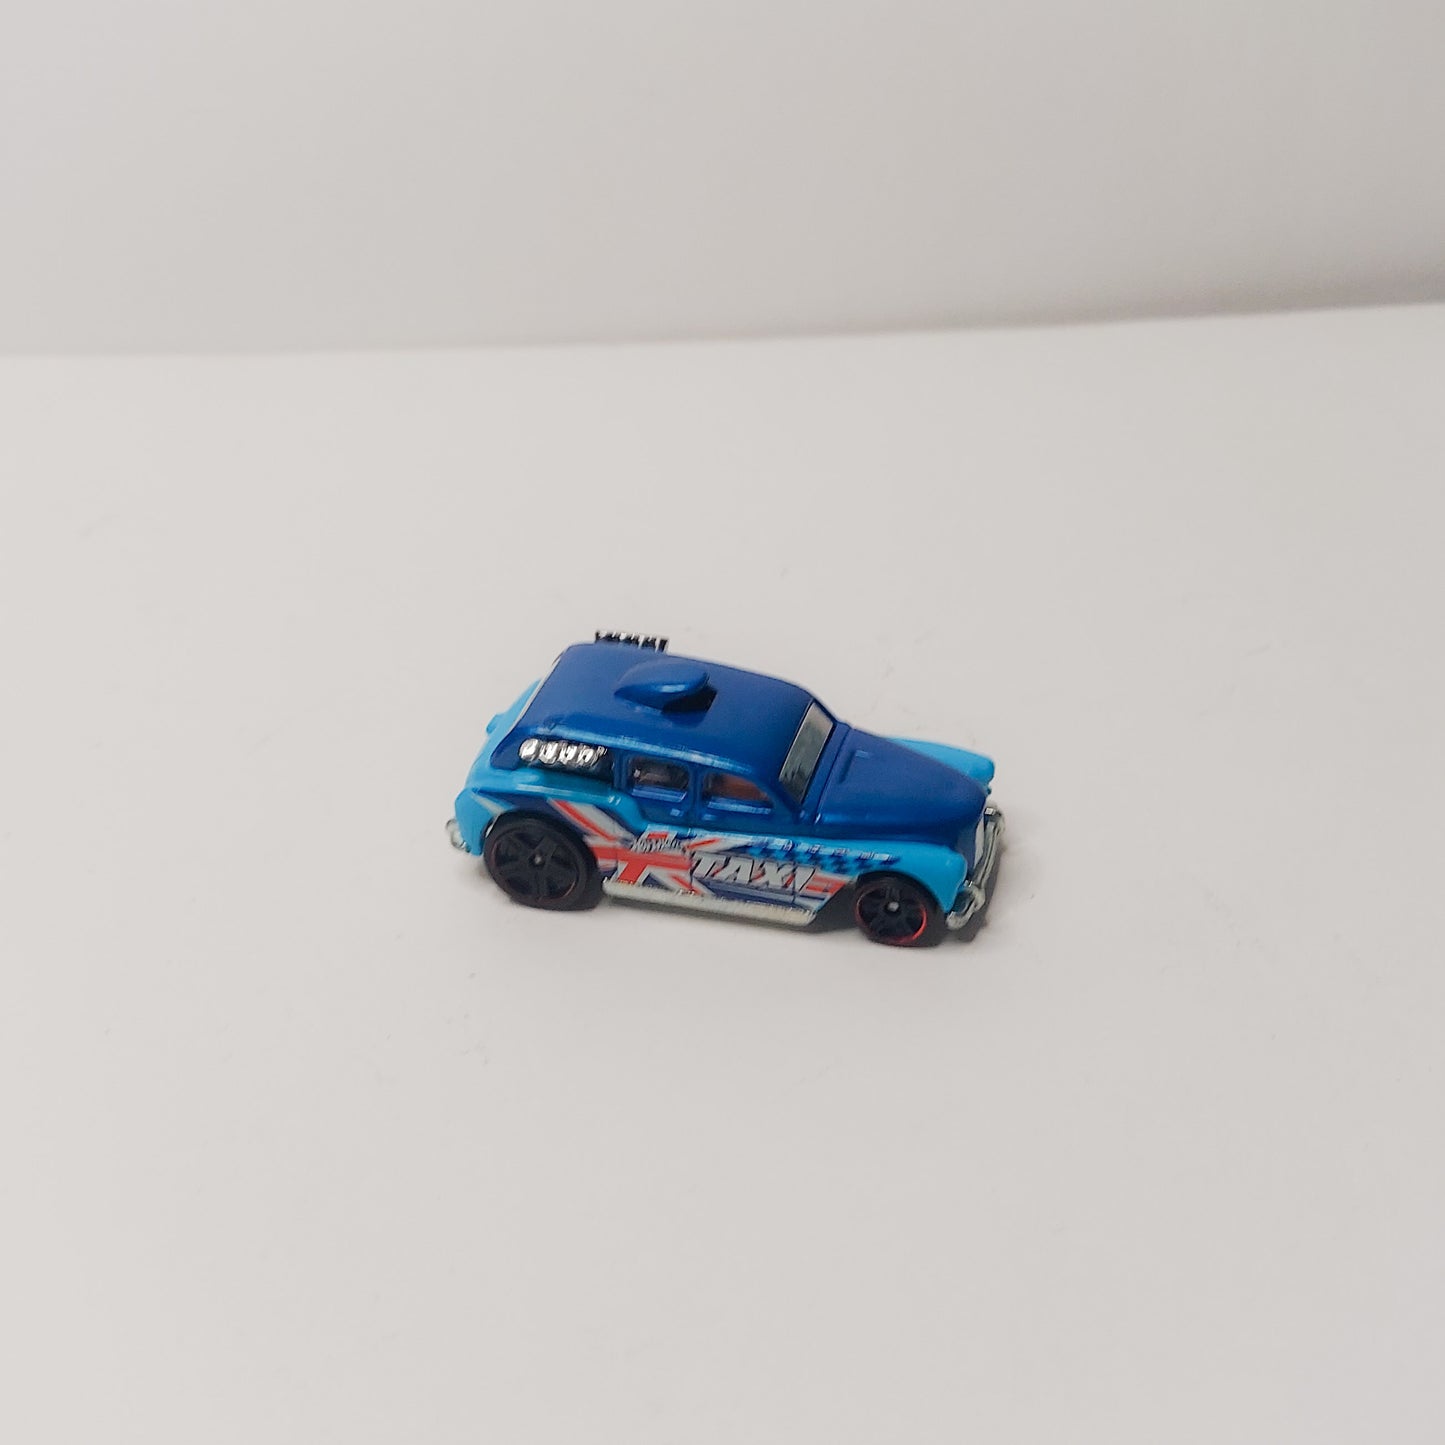 2015 Hot Wheels Cockney Cab II blue